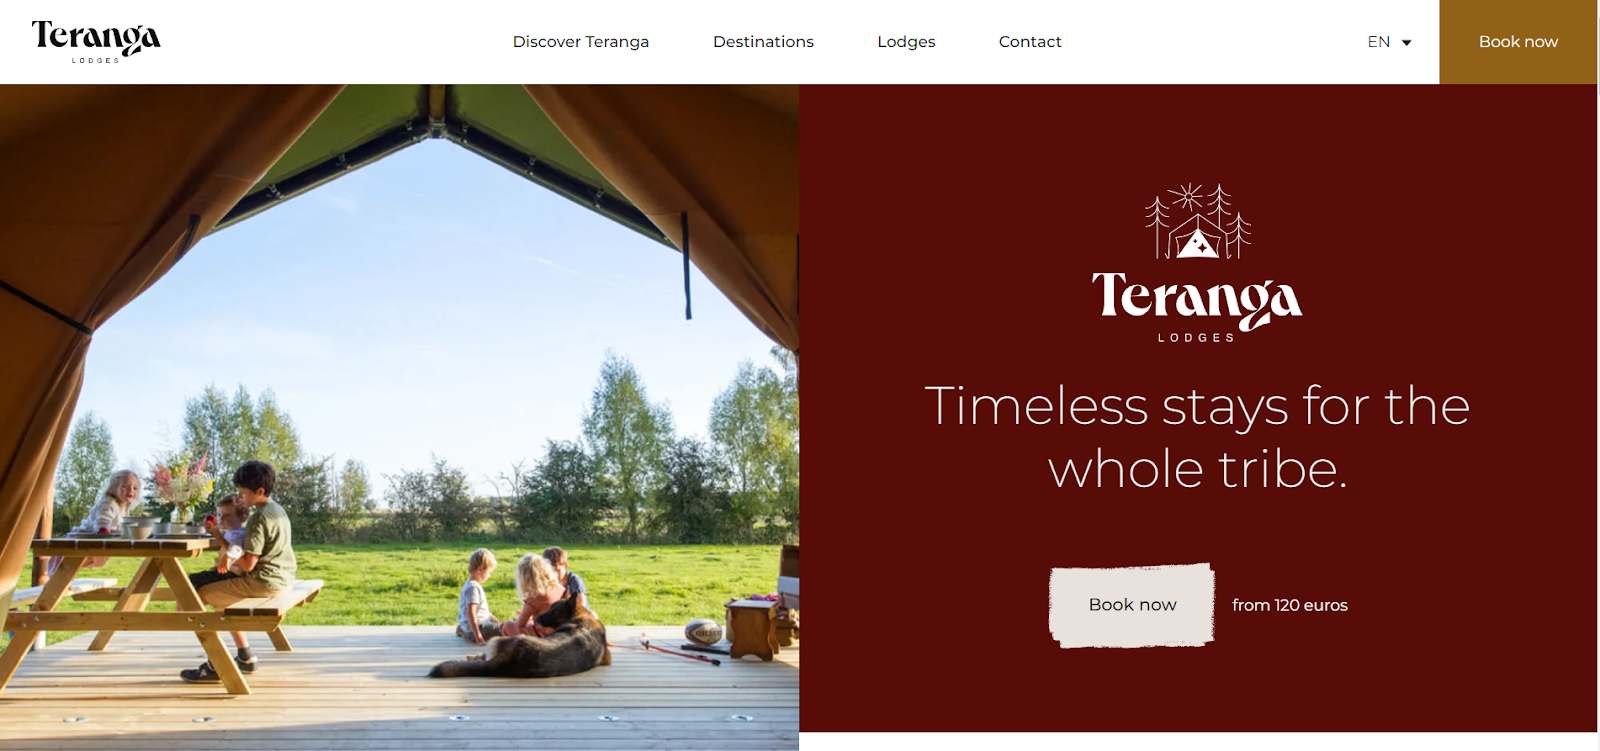 hotel website examples, Teranga Lodges